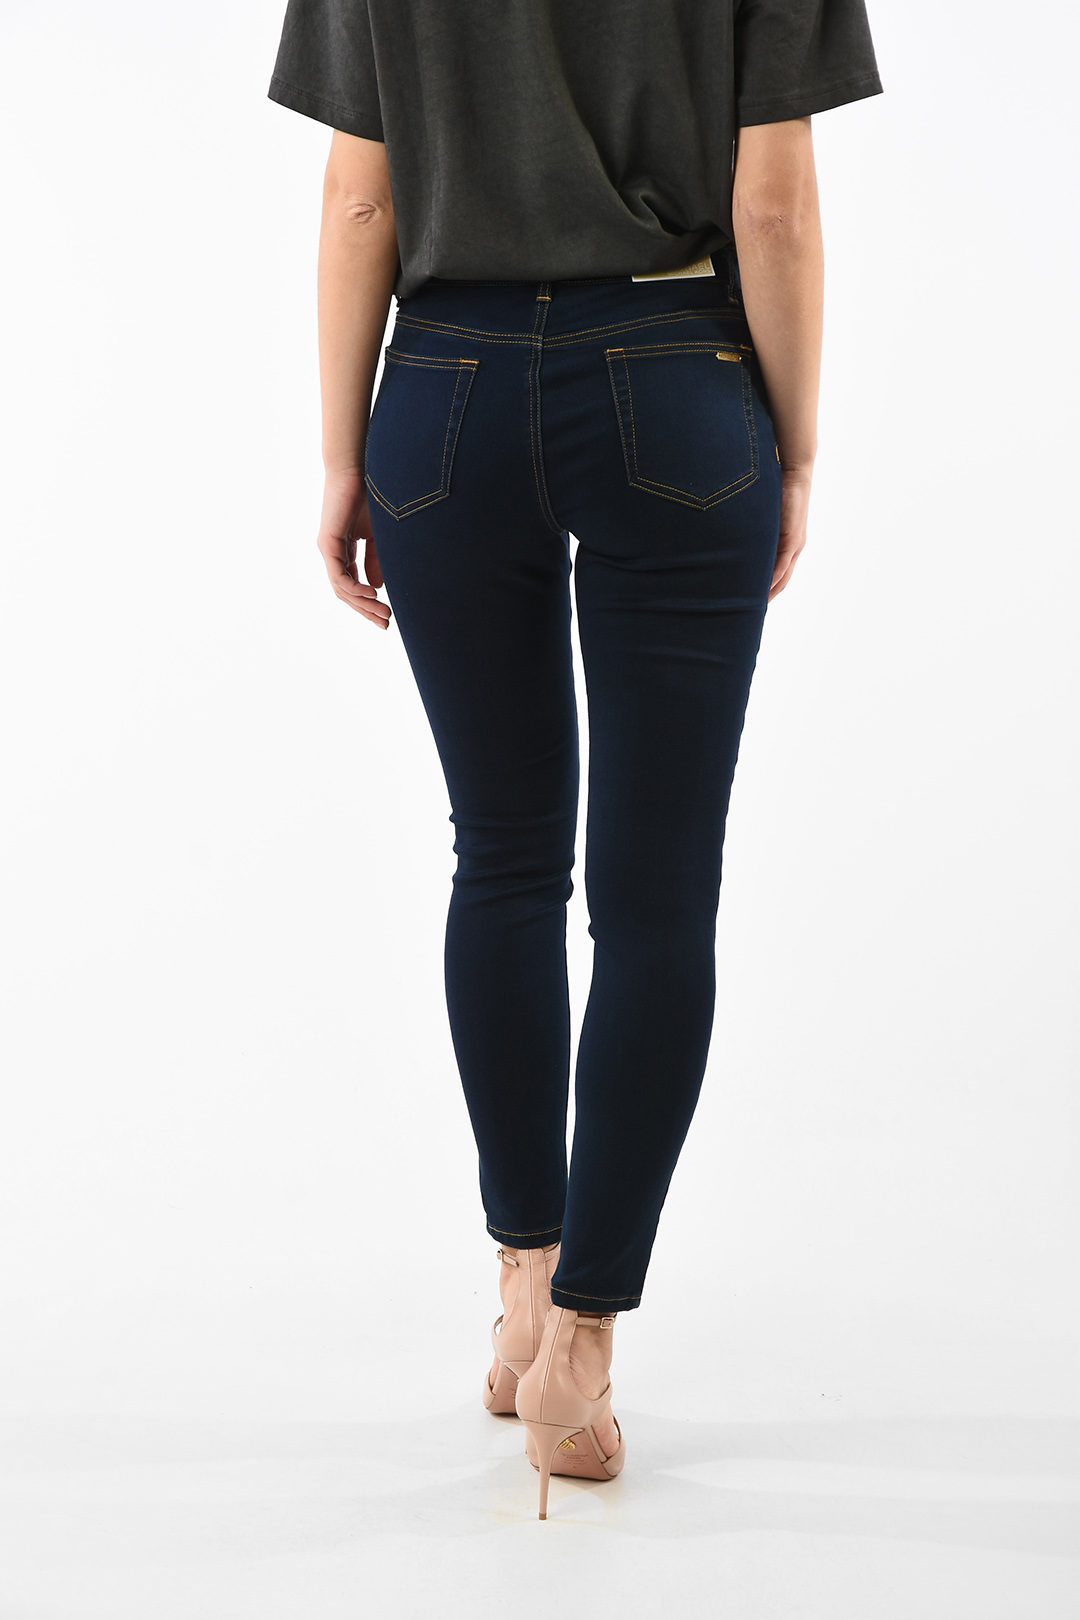 https://data.glamood.com/imgprodotto/stretch-cotton-high-waist-selma-skinny-fit-jeans_929032_zoom.jpg